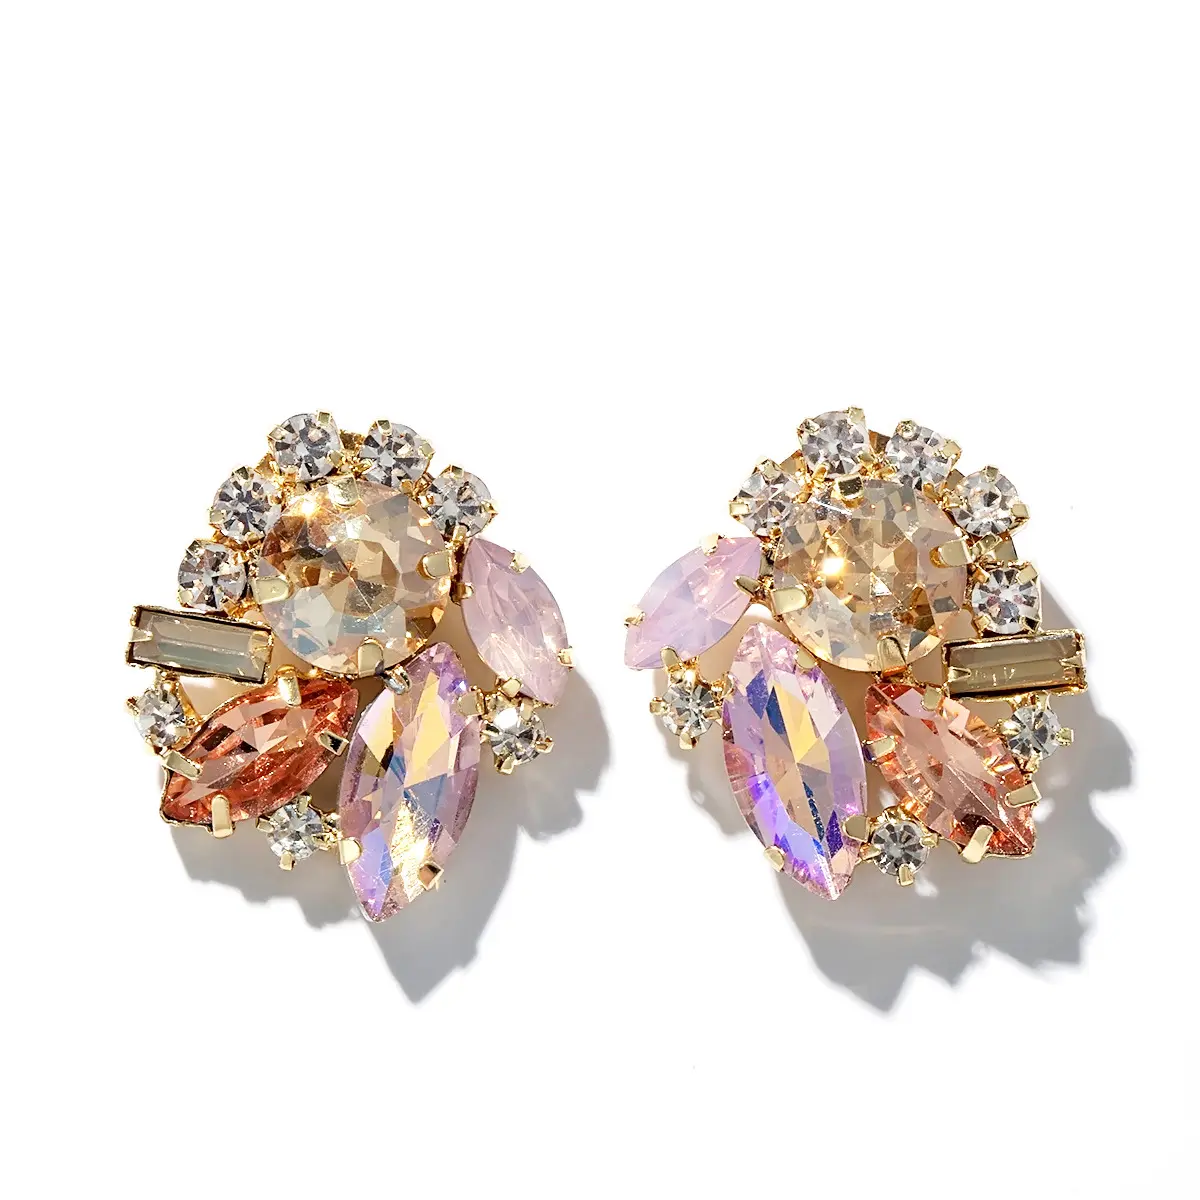 New Creative Jewelry Women Earring Zircon Crystal Round Earrings Personalized Pendant Earrings Fashion Accessories